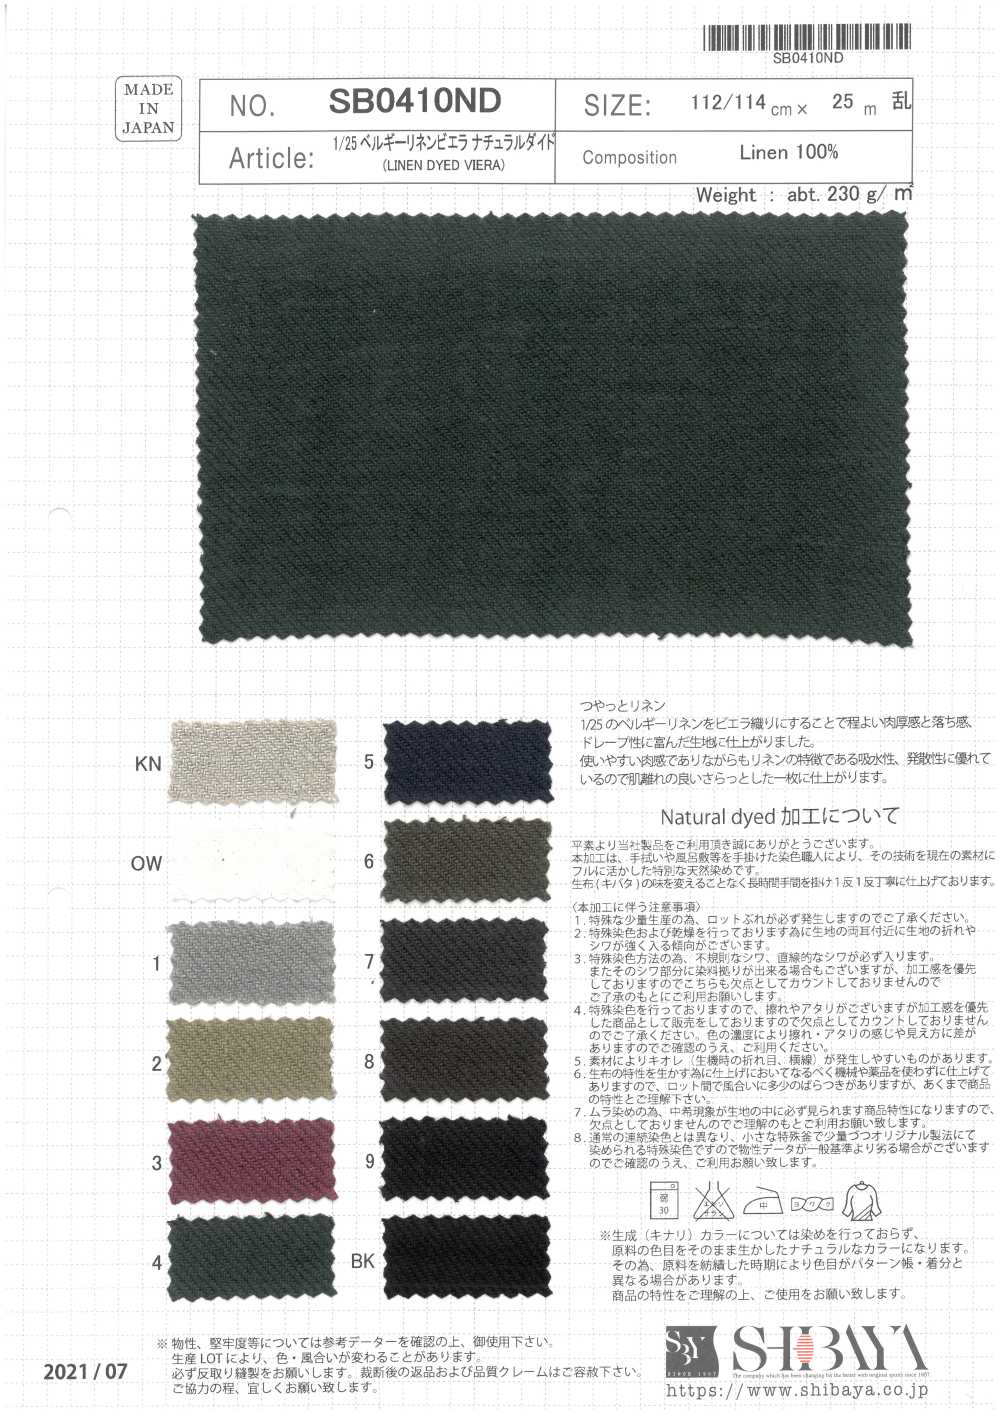 SB0410ND 1/25 Belgian Linen Viyella Natural Dyeing[Textile / Fabric] SHIBAYA